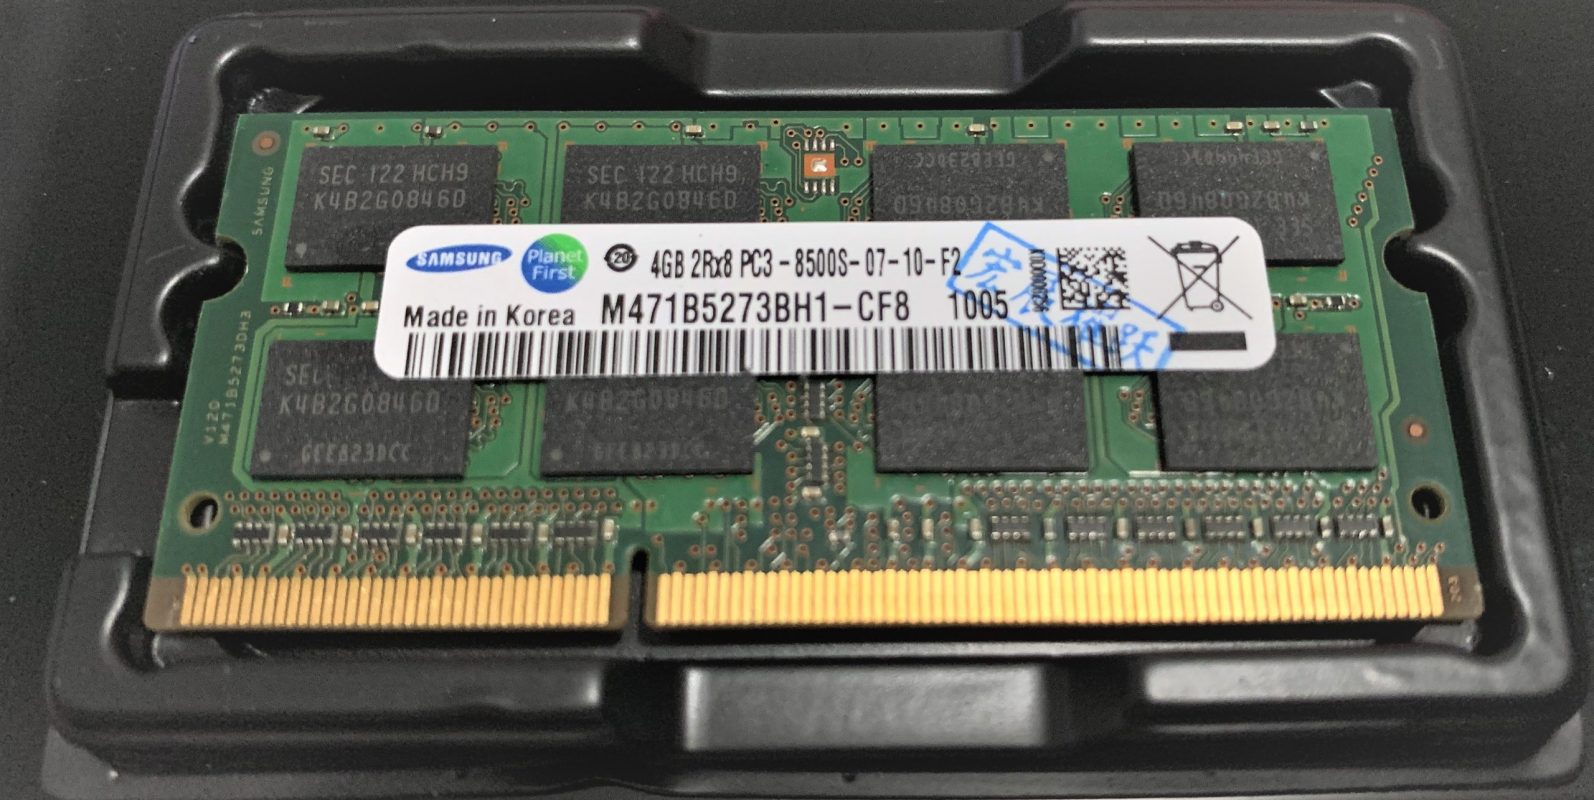 Libro Guinness de récord mundial picnic gemelo Samsung 4GB DDR3-8500s DDR3-1066 M471B5273BH1-CF8 – Tienda Geek